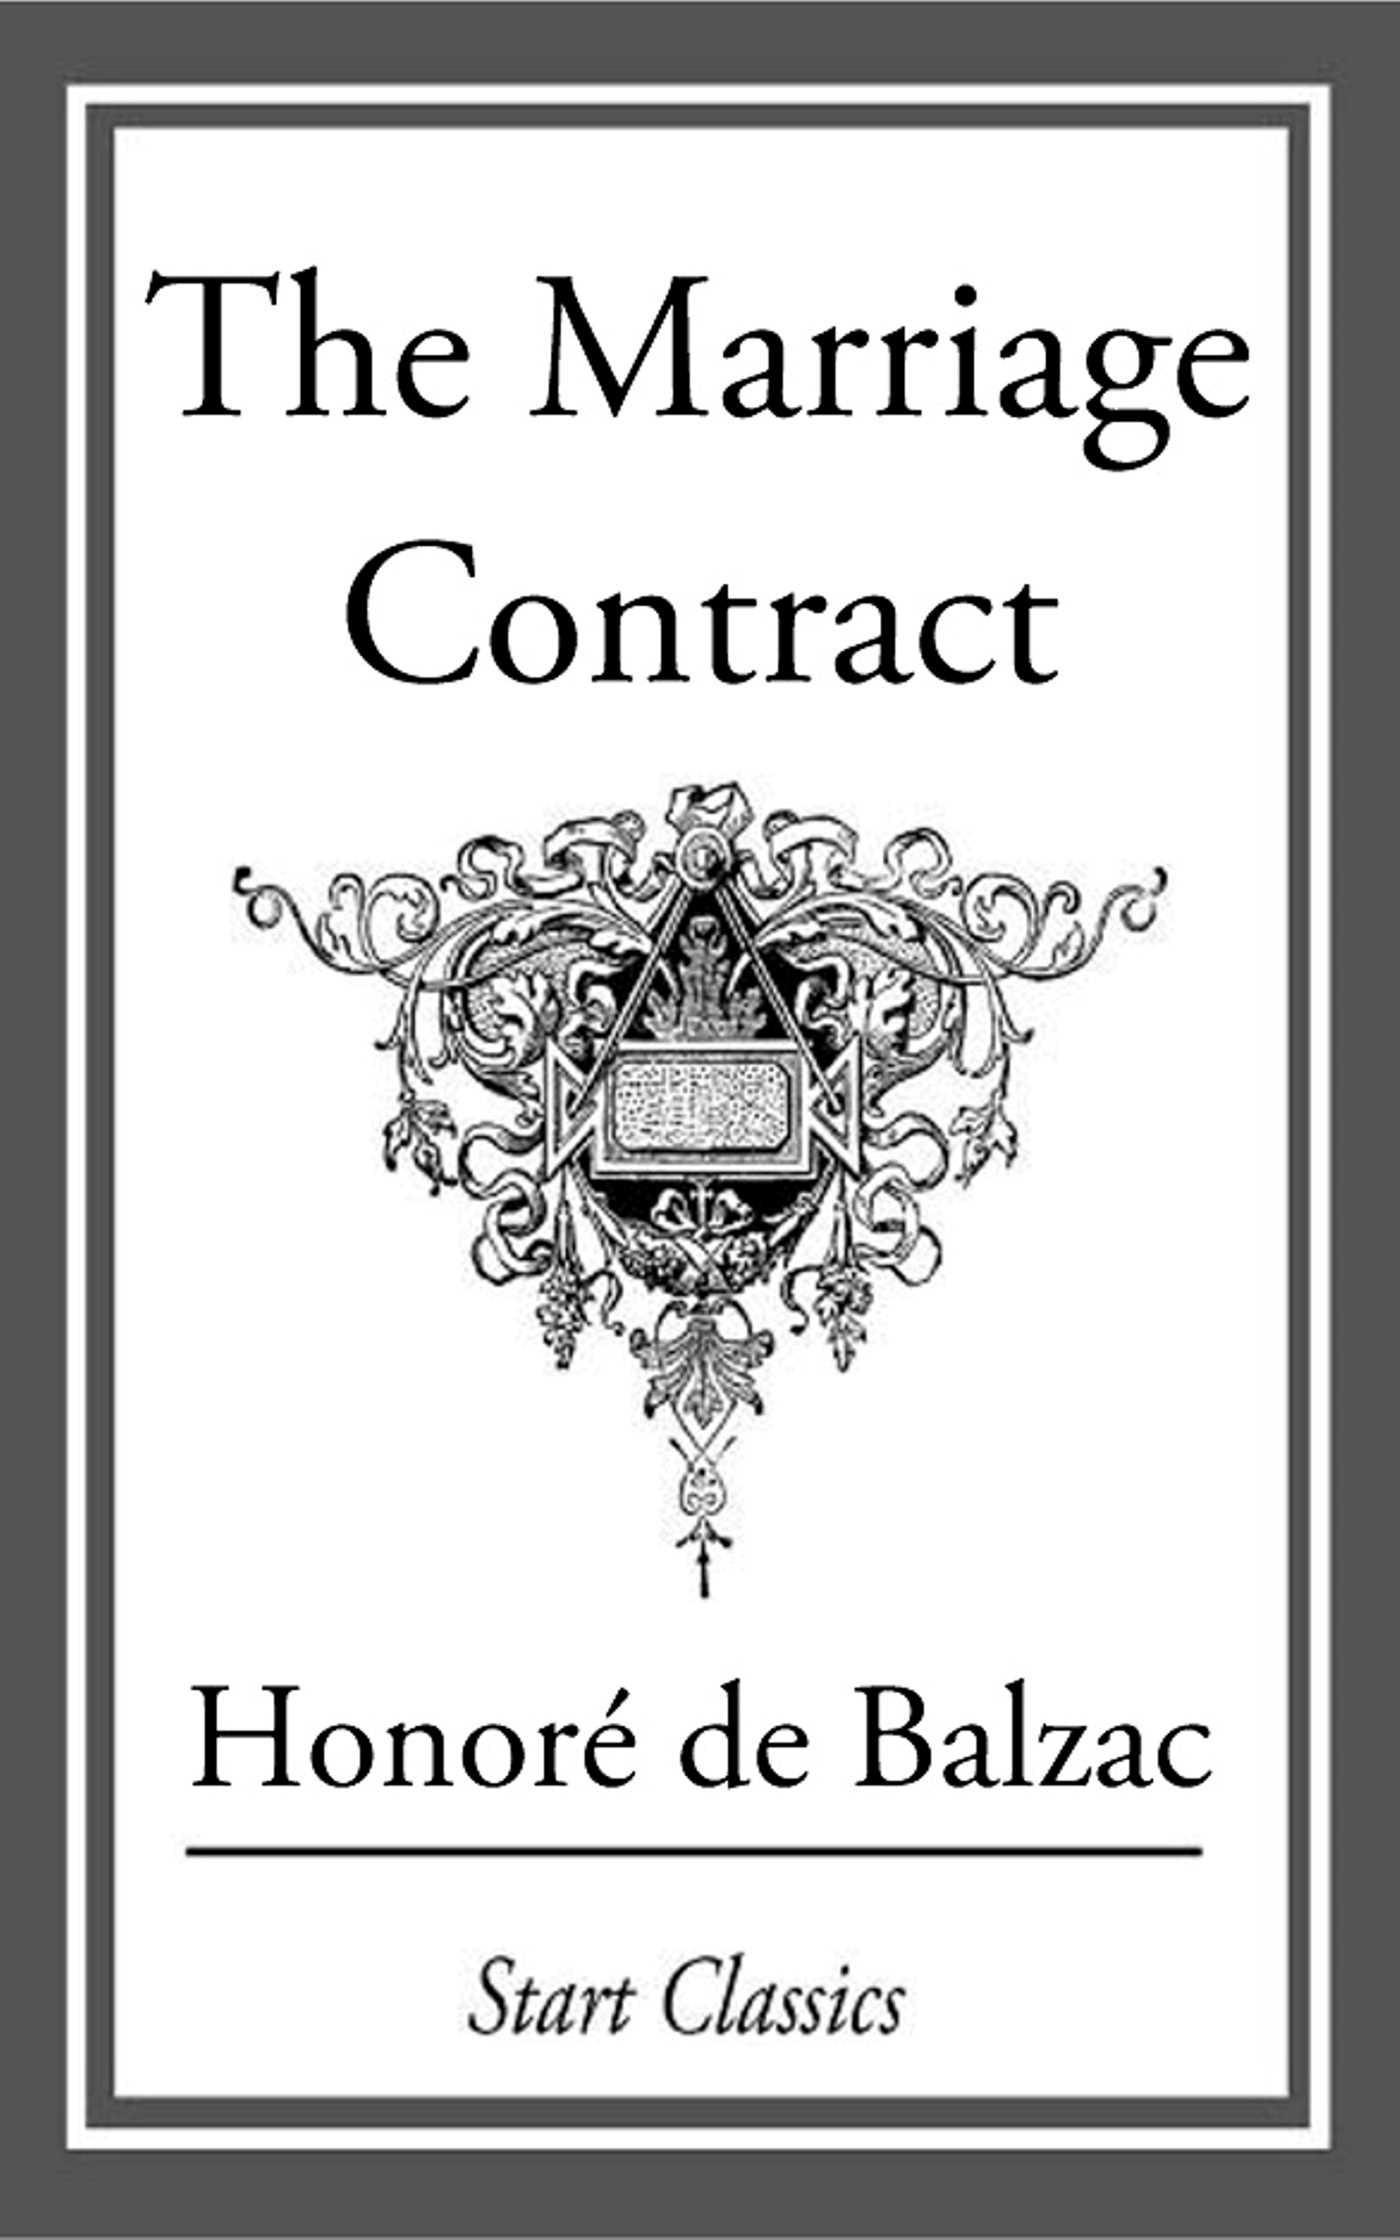 The Marriage Contract - Honore de Balzac